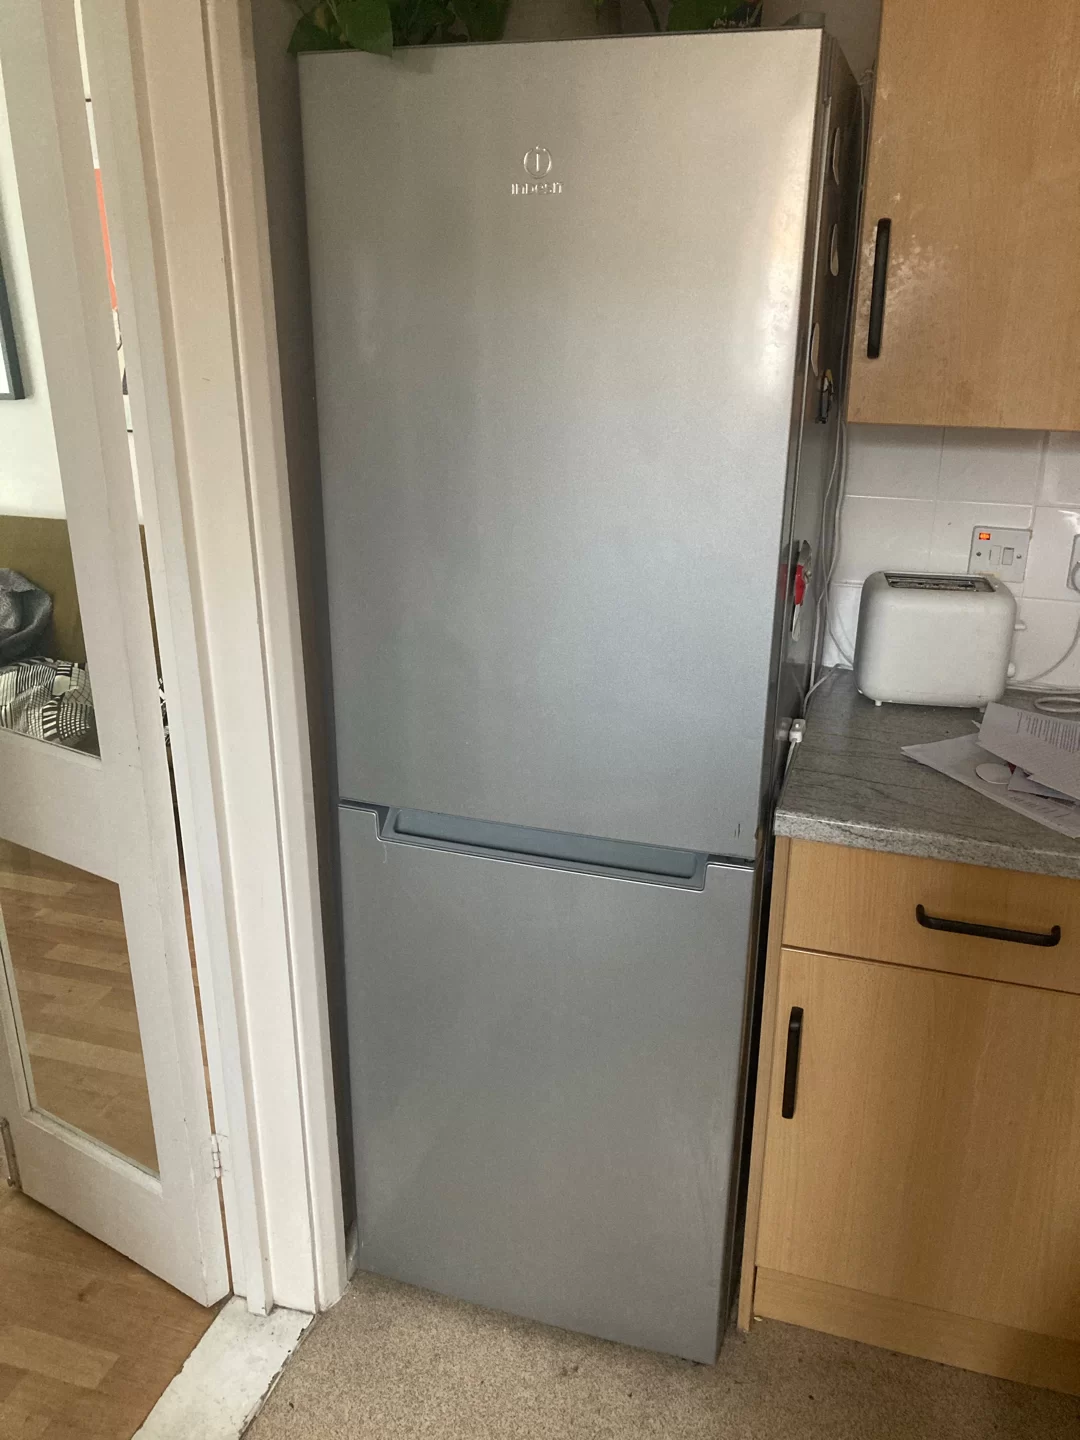 price of a tall fridge disposal £50